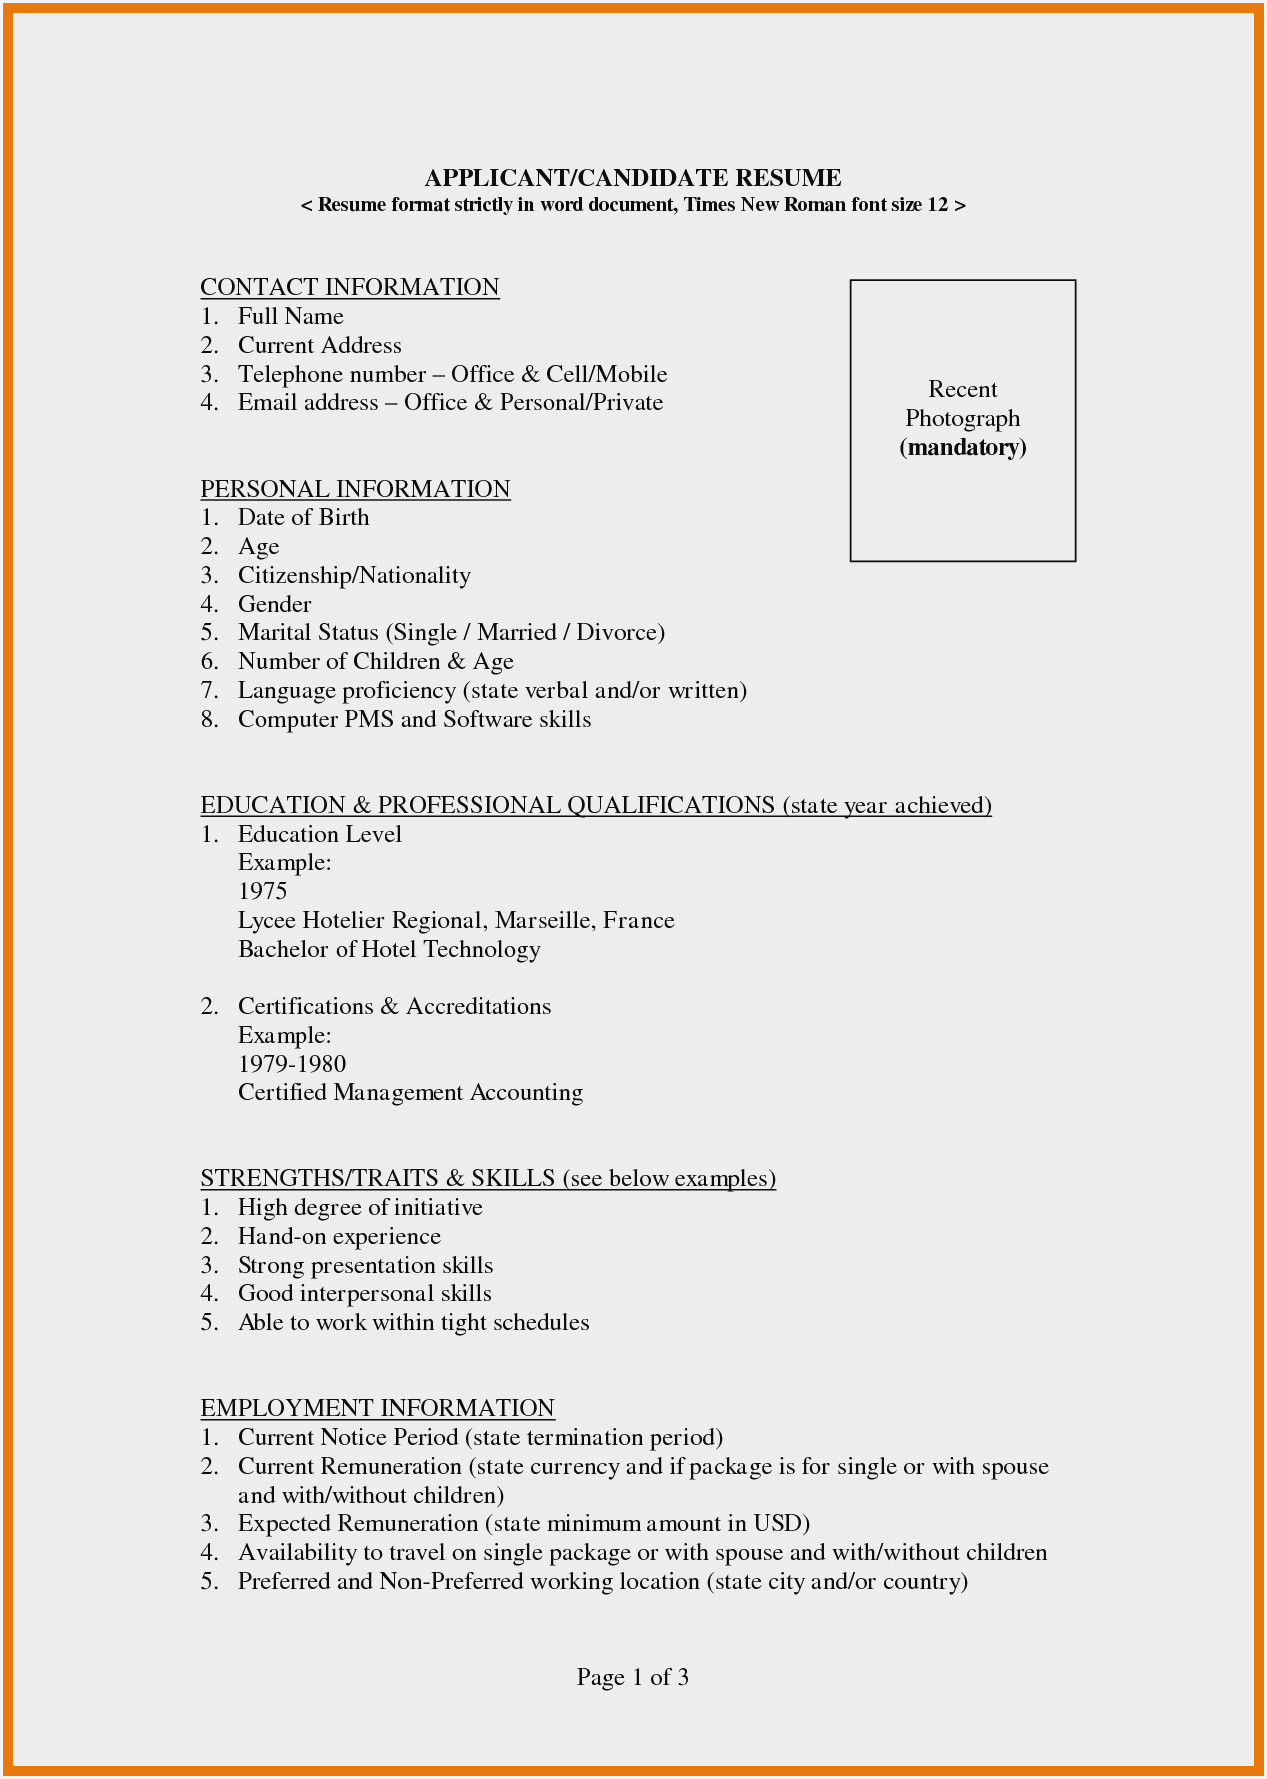 Sample Resume for Hotel Management Fresher Download Resume format for Hotel Management Fresher – Just One …